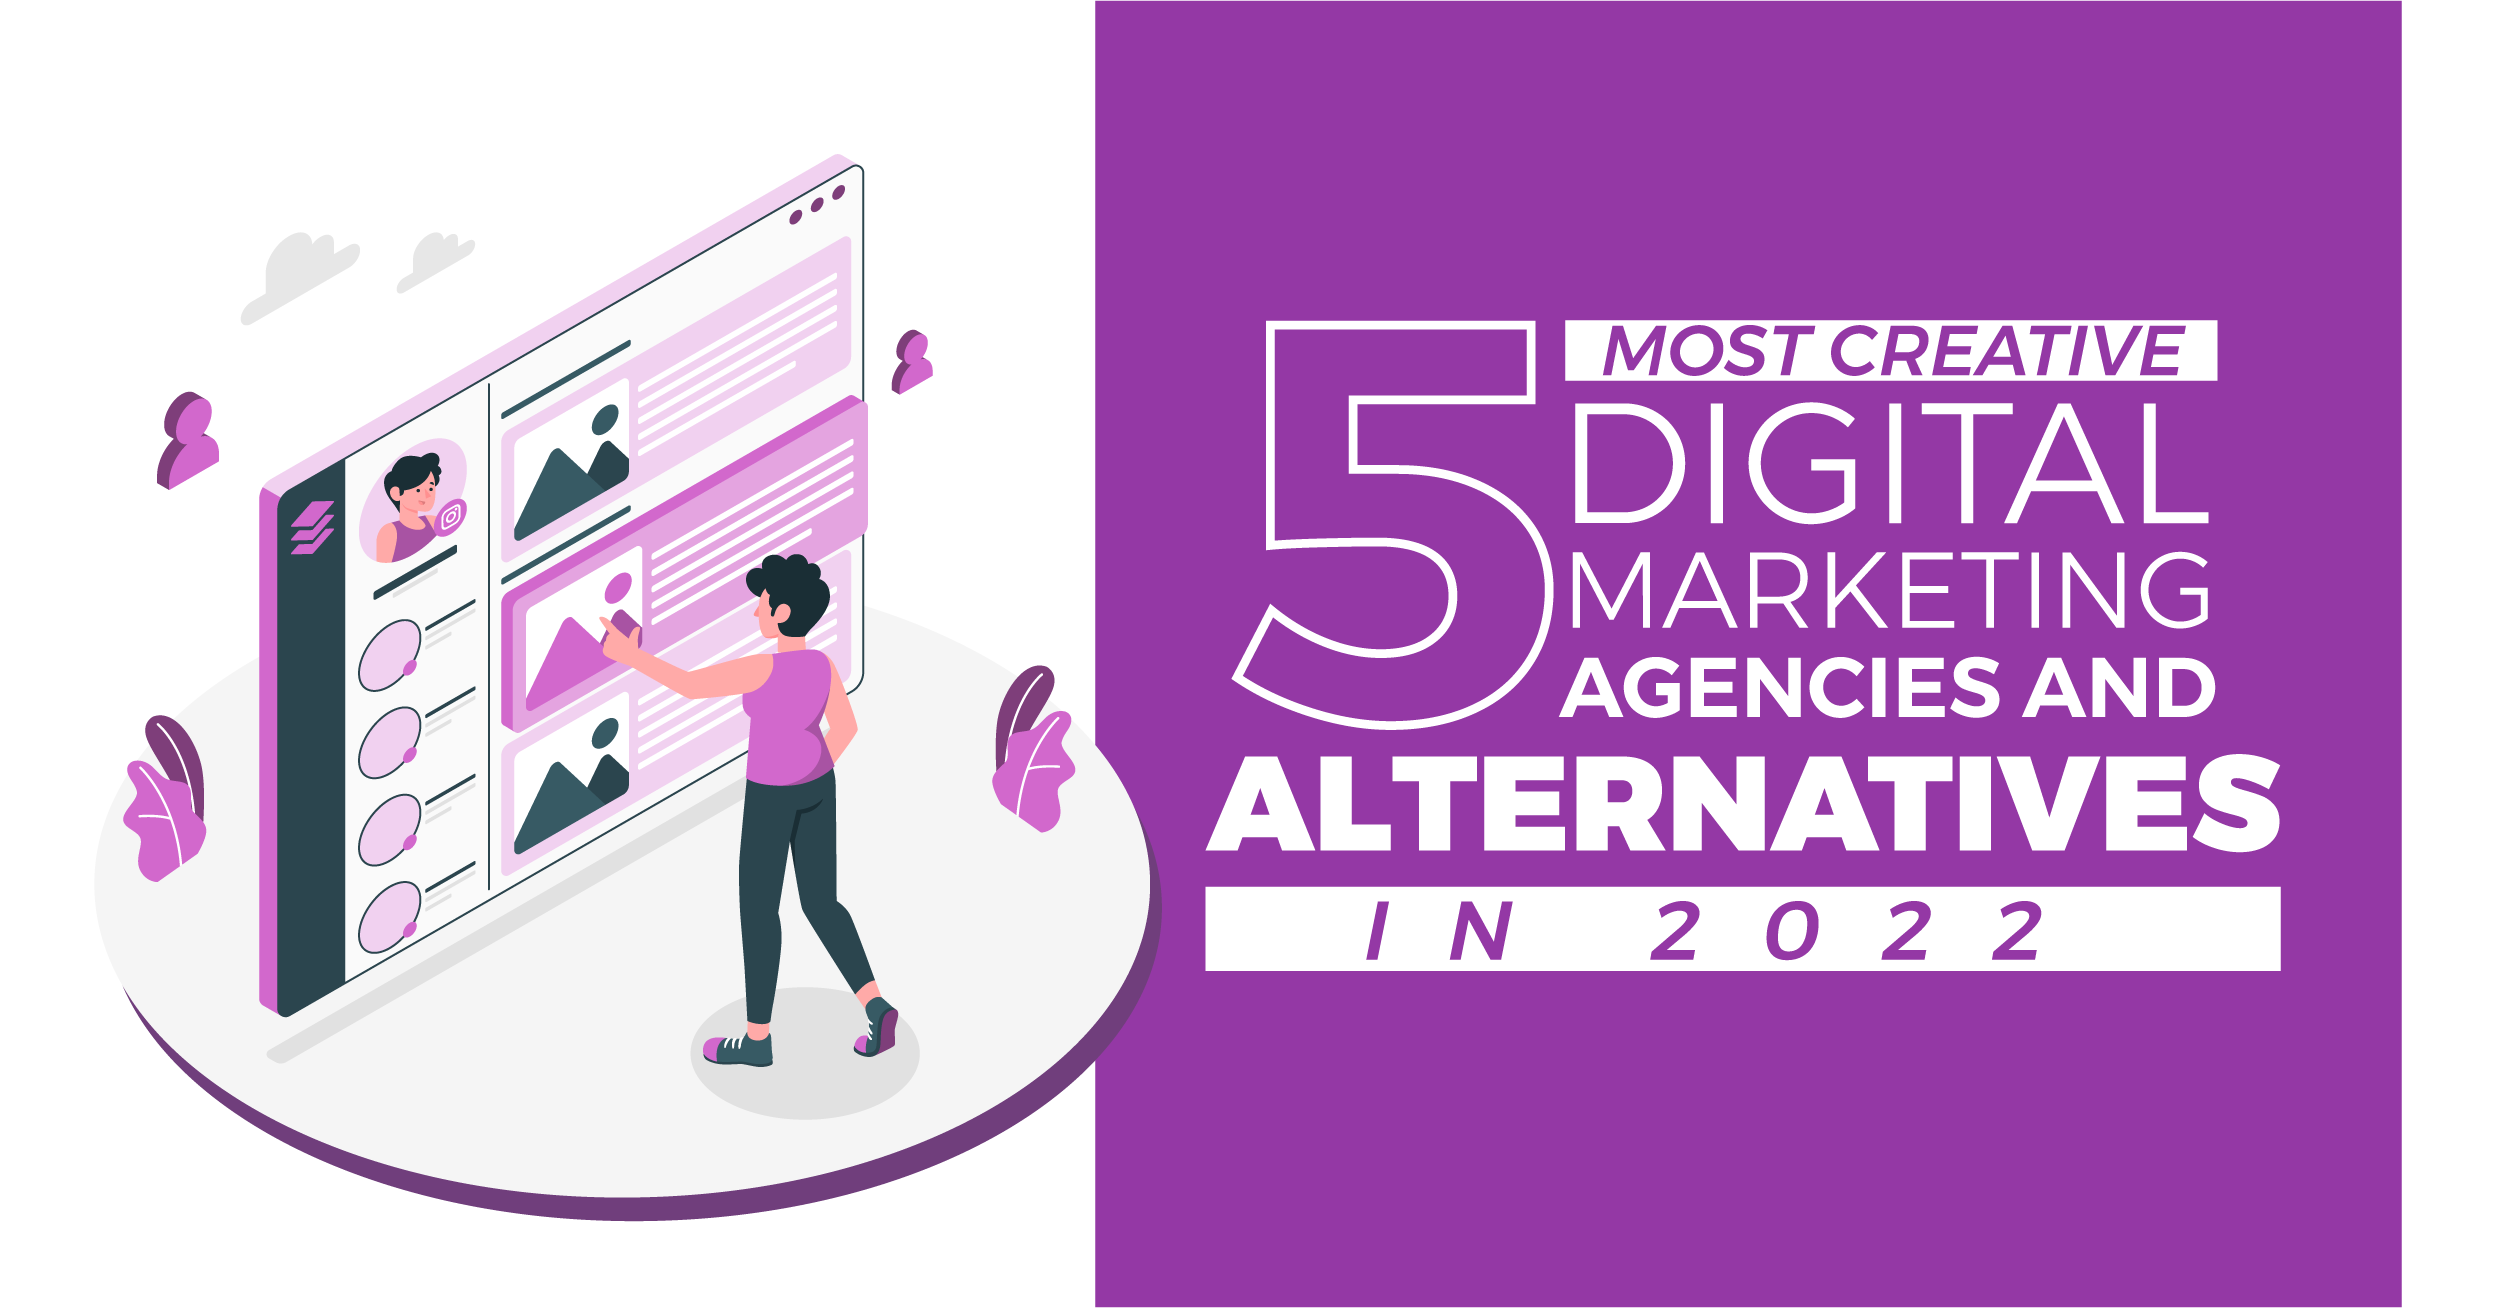 5 Most Creative Digital Marketing Agencies & Alternatives in 2022